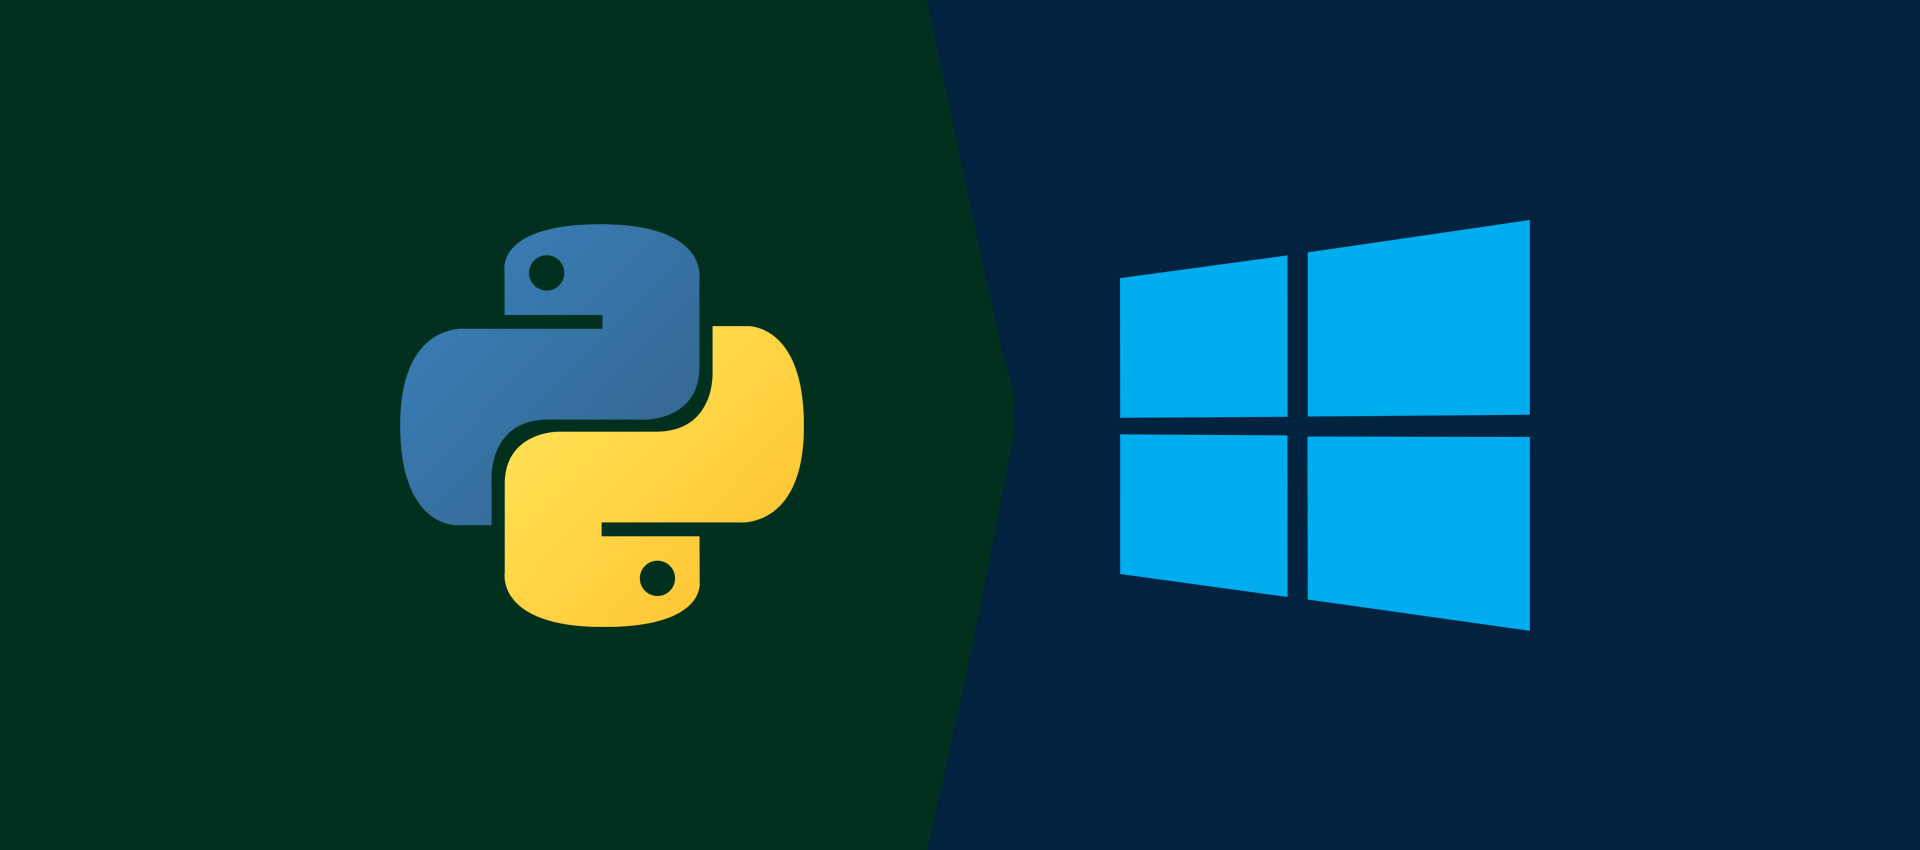 How To Install Python On Windows